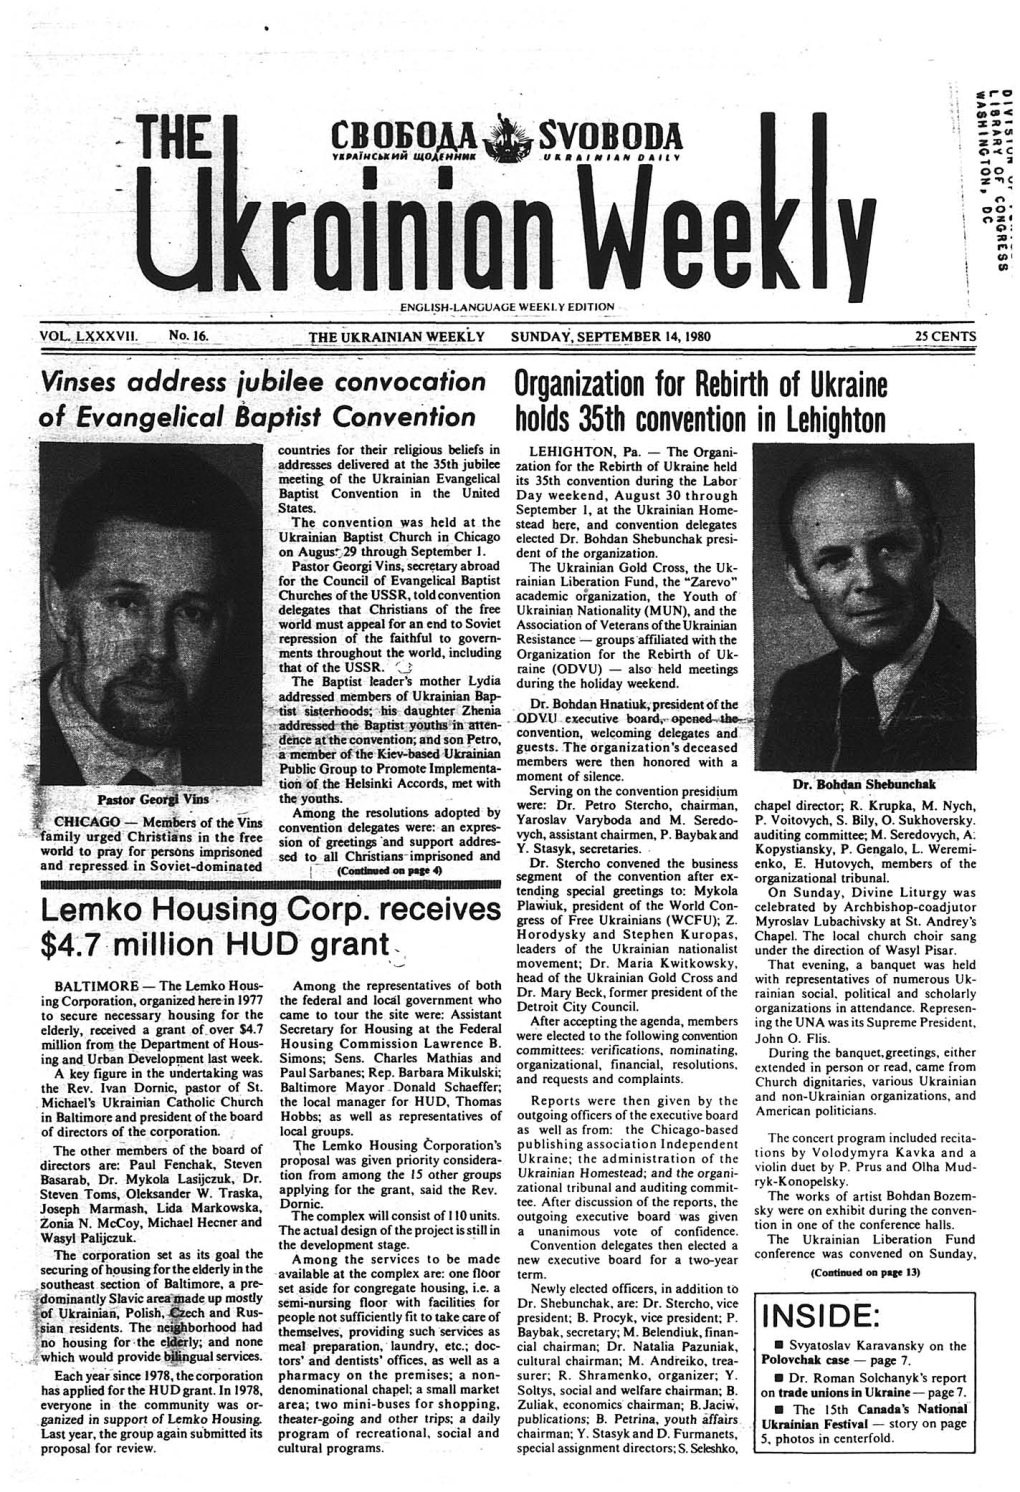 The Ukrainian Weekly 1980, No.38